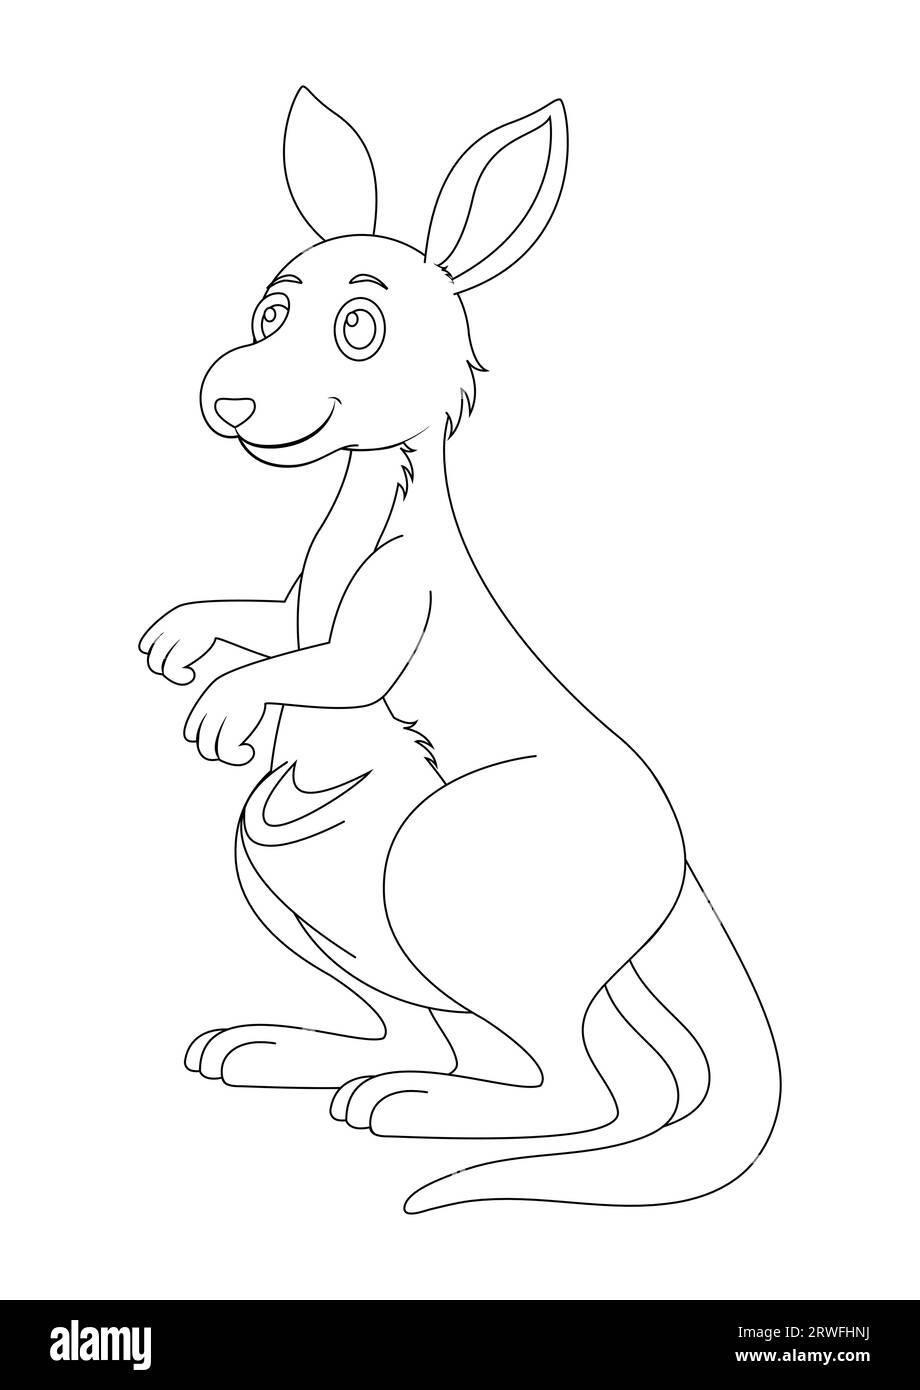 Black and White Kangaroo Cartoon Character Vector. Coloring Page of a Kangaroo Stock Vector